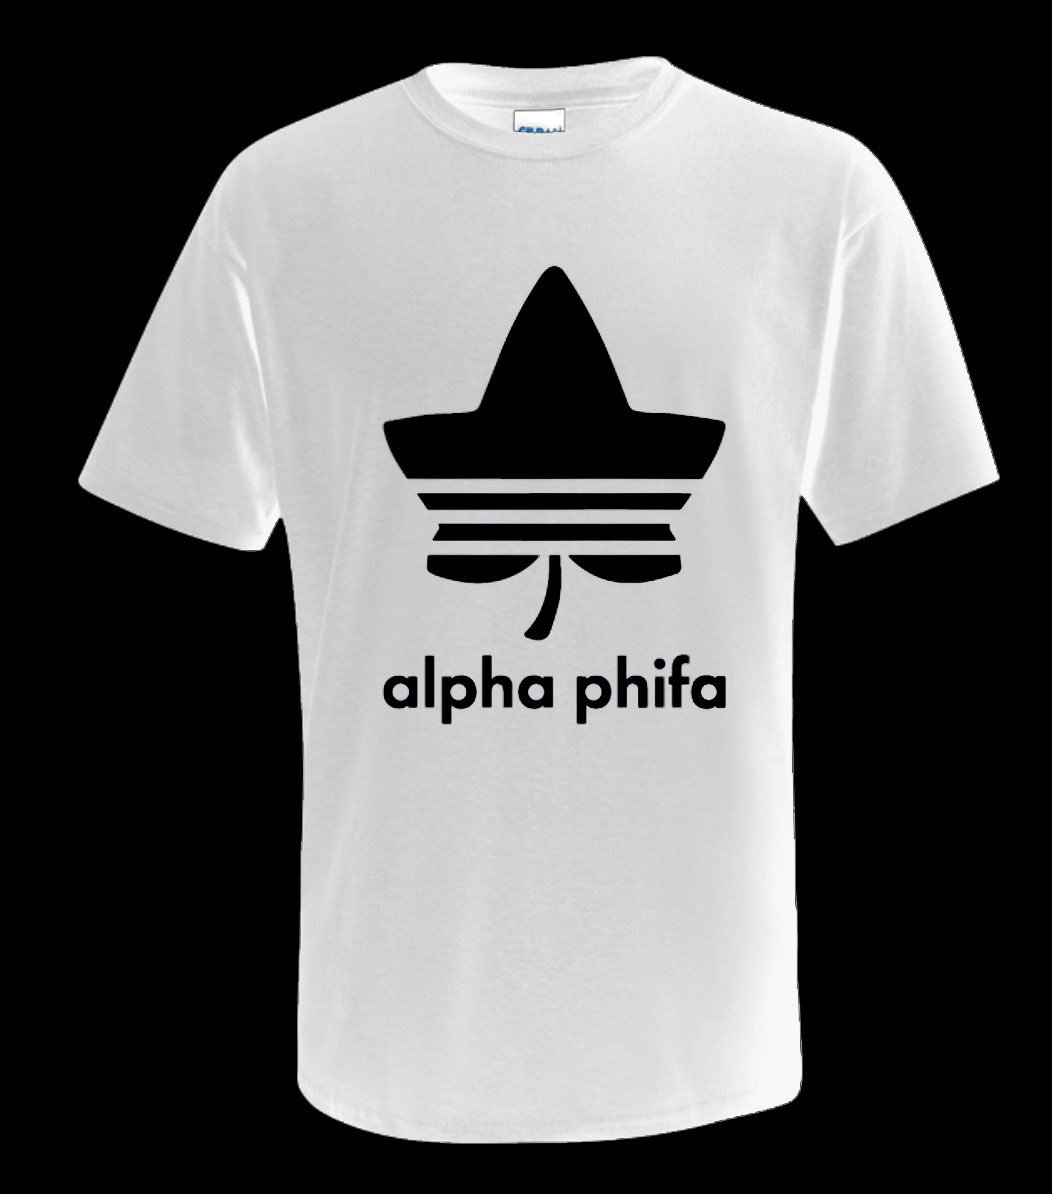 alpha phifa shirt